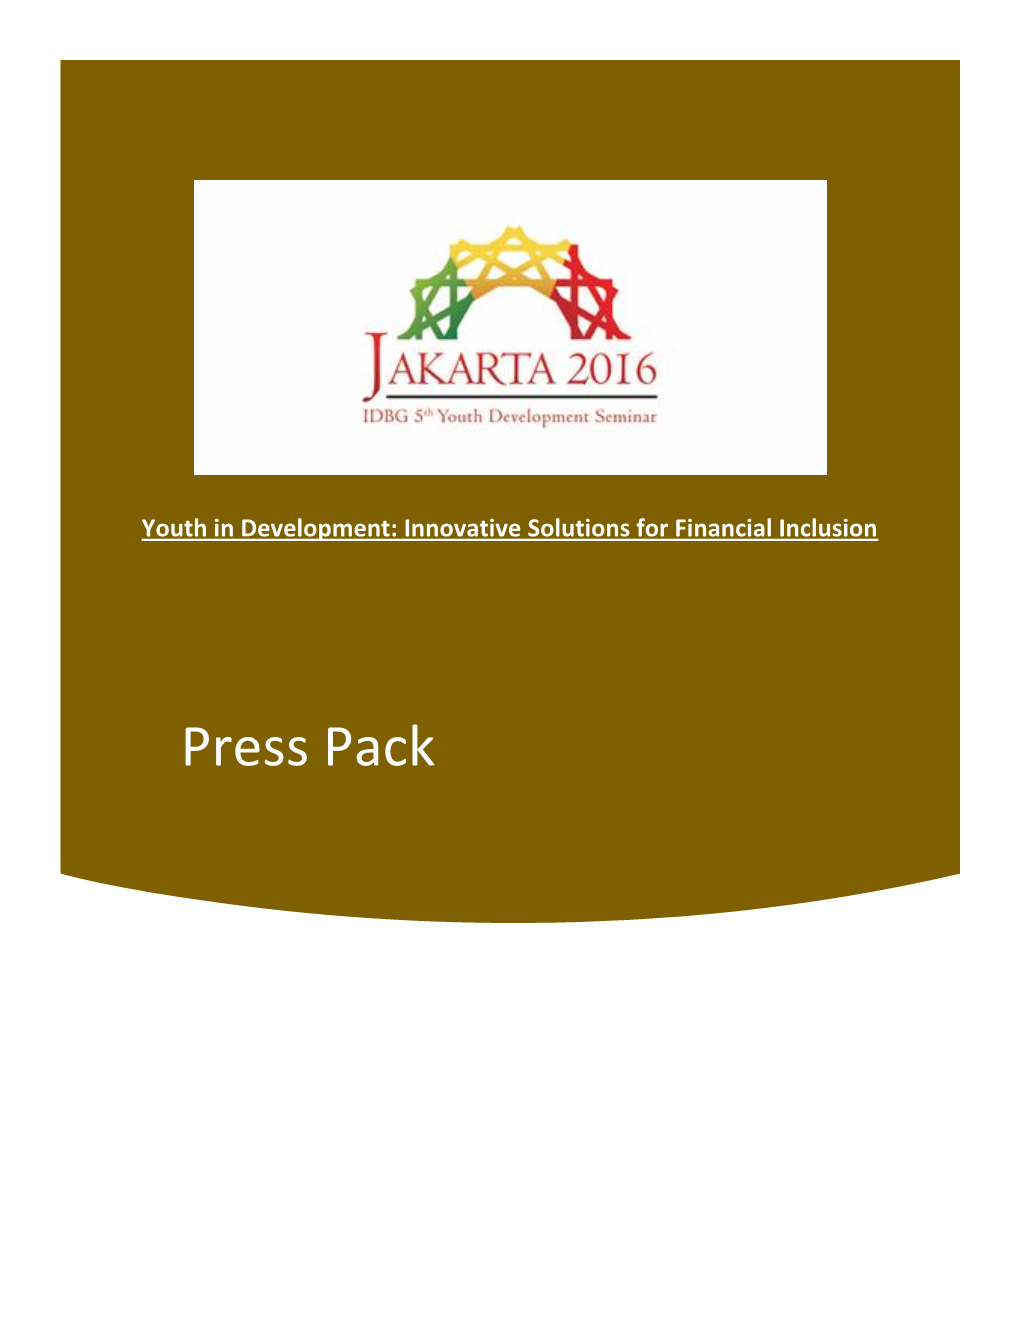 Press Pack the Islamic Development Bank Group 5TH Annual Youth Development Seminar